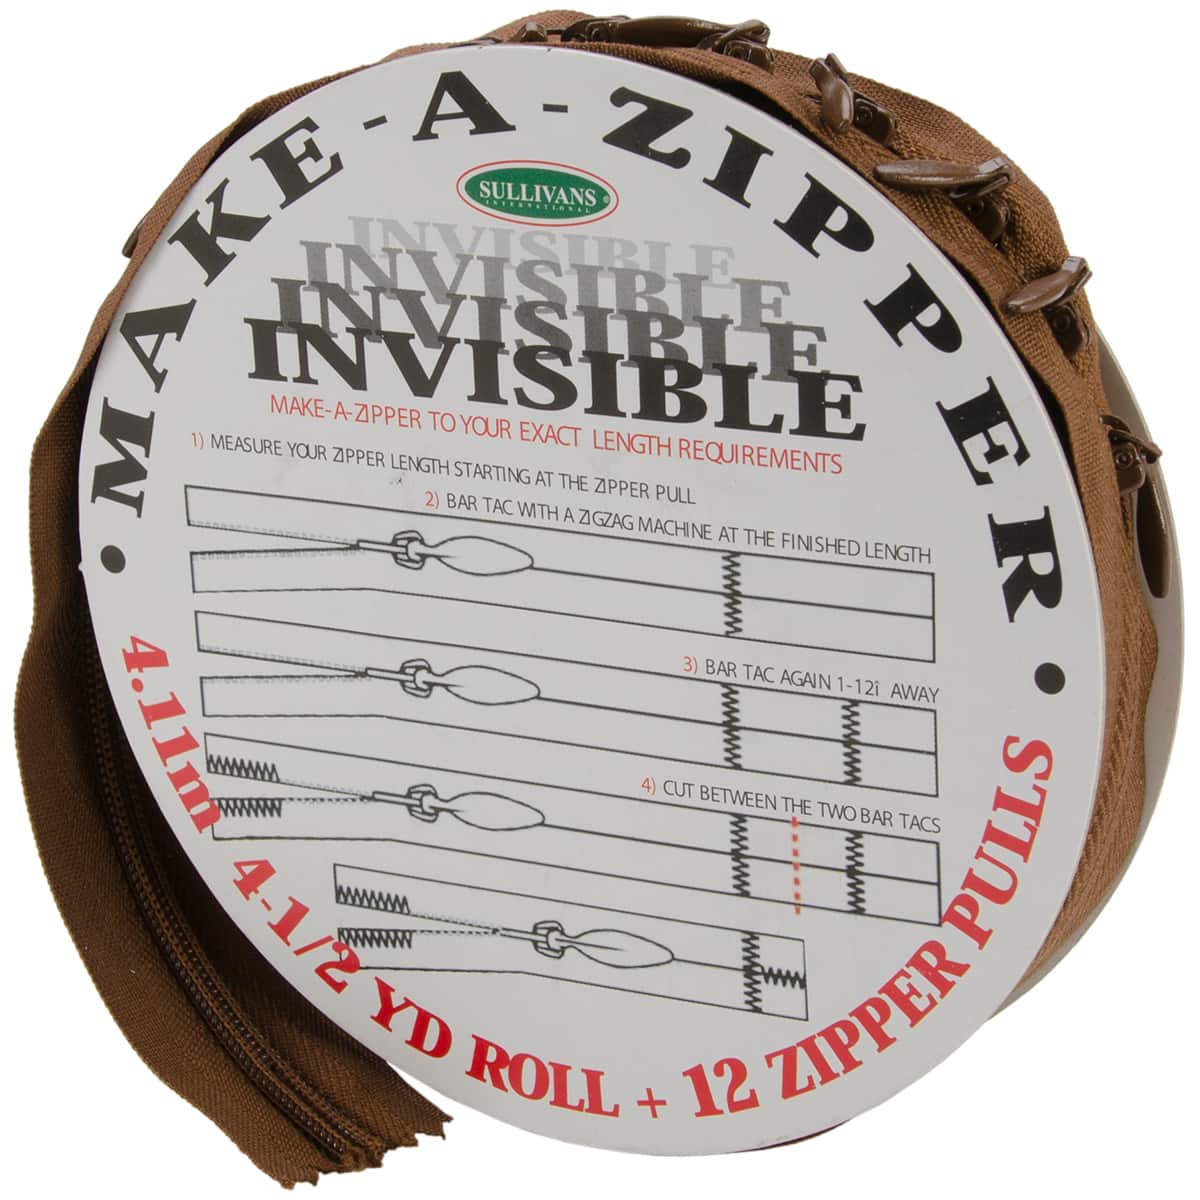 Sullivans Invisible 4.5yd. Make-A-Zipper Set Roll